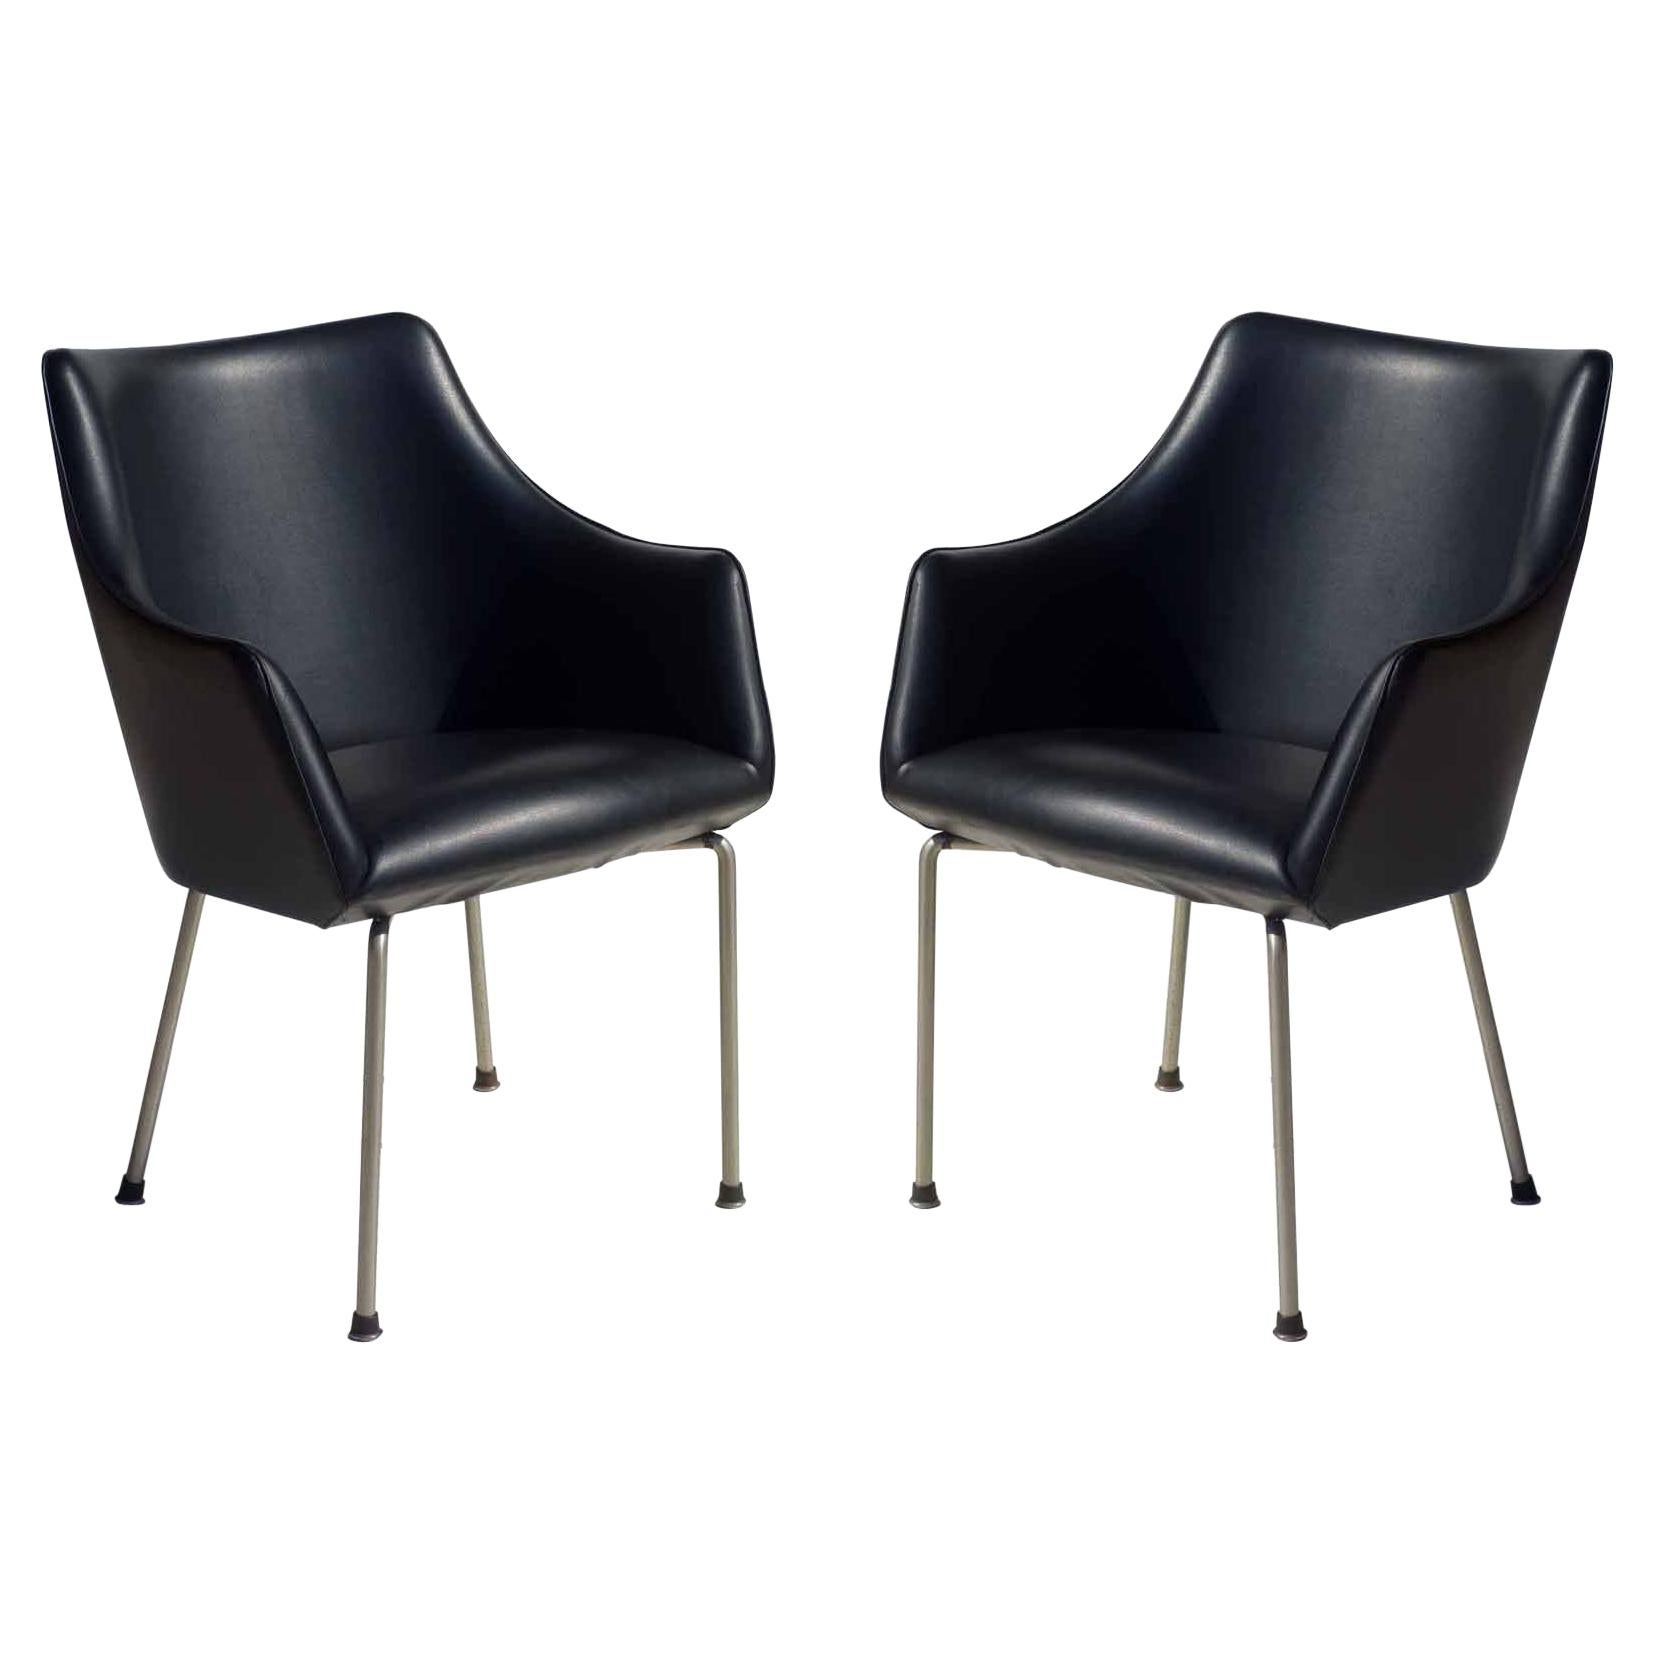 P20 Osvaldo Borsani for Tecno 1955 Mid-Century Modern Pair of Chairs